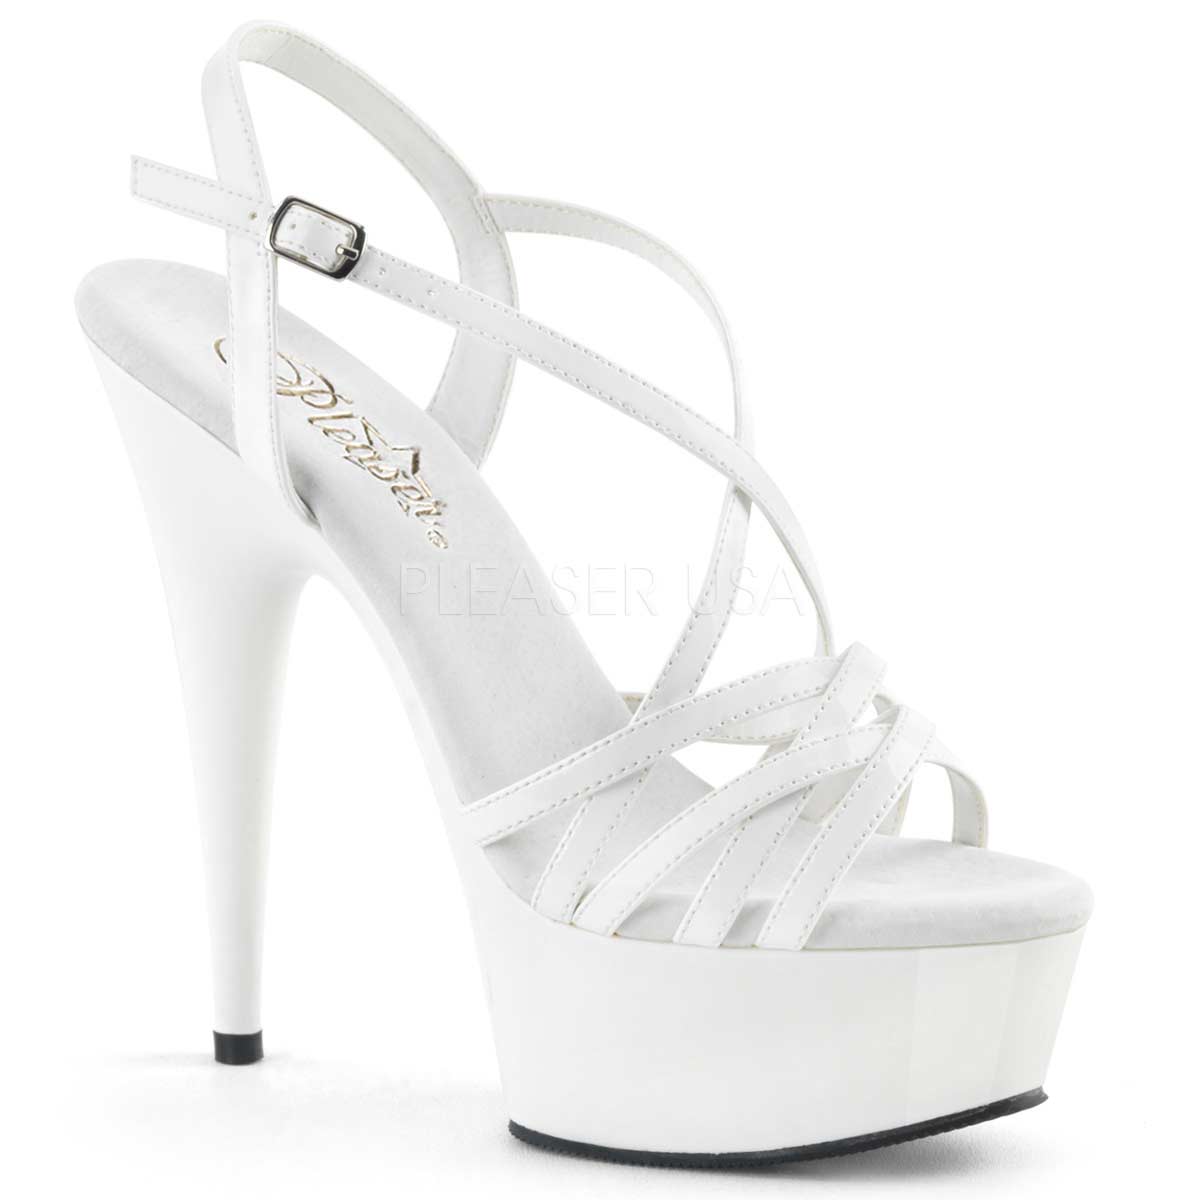 Pleaser Delight-613 - White Pat in Sexy Heels & Platforms - $57.95